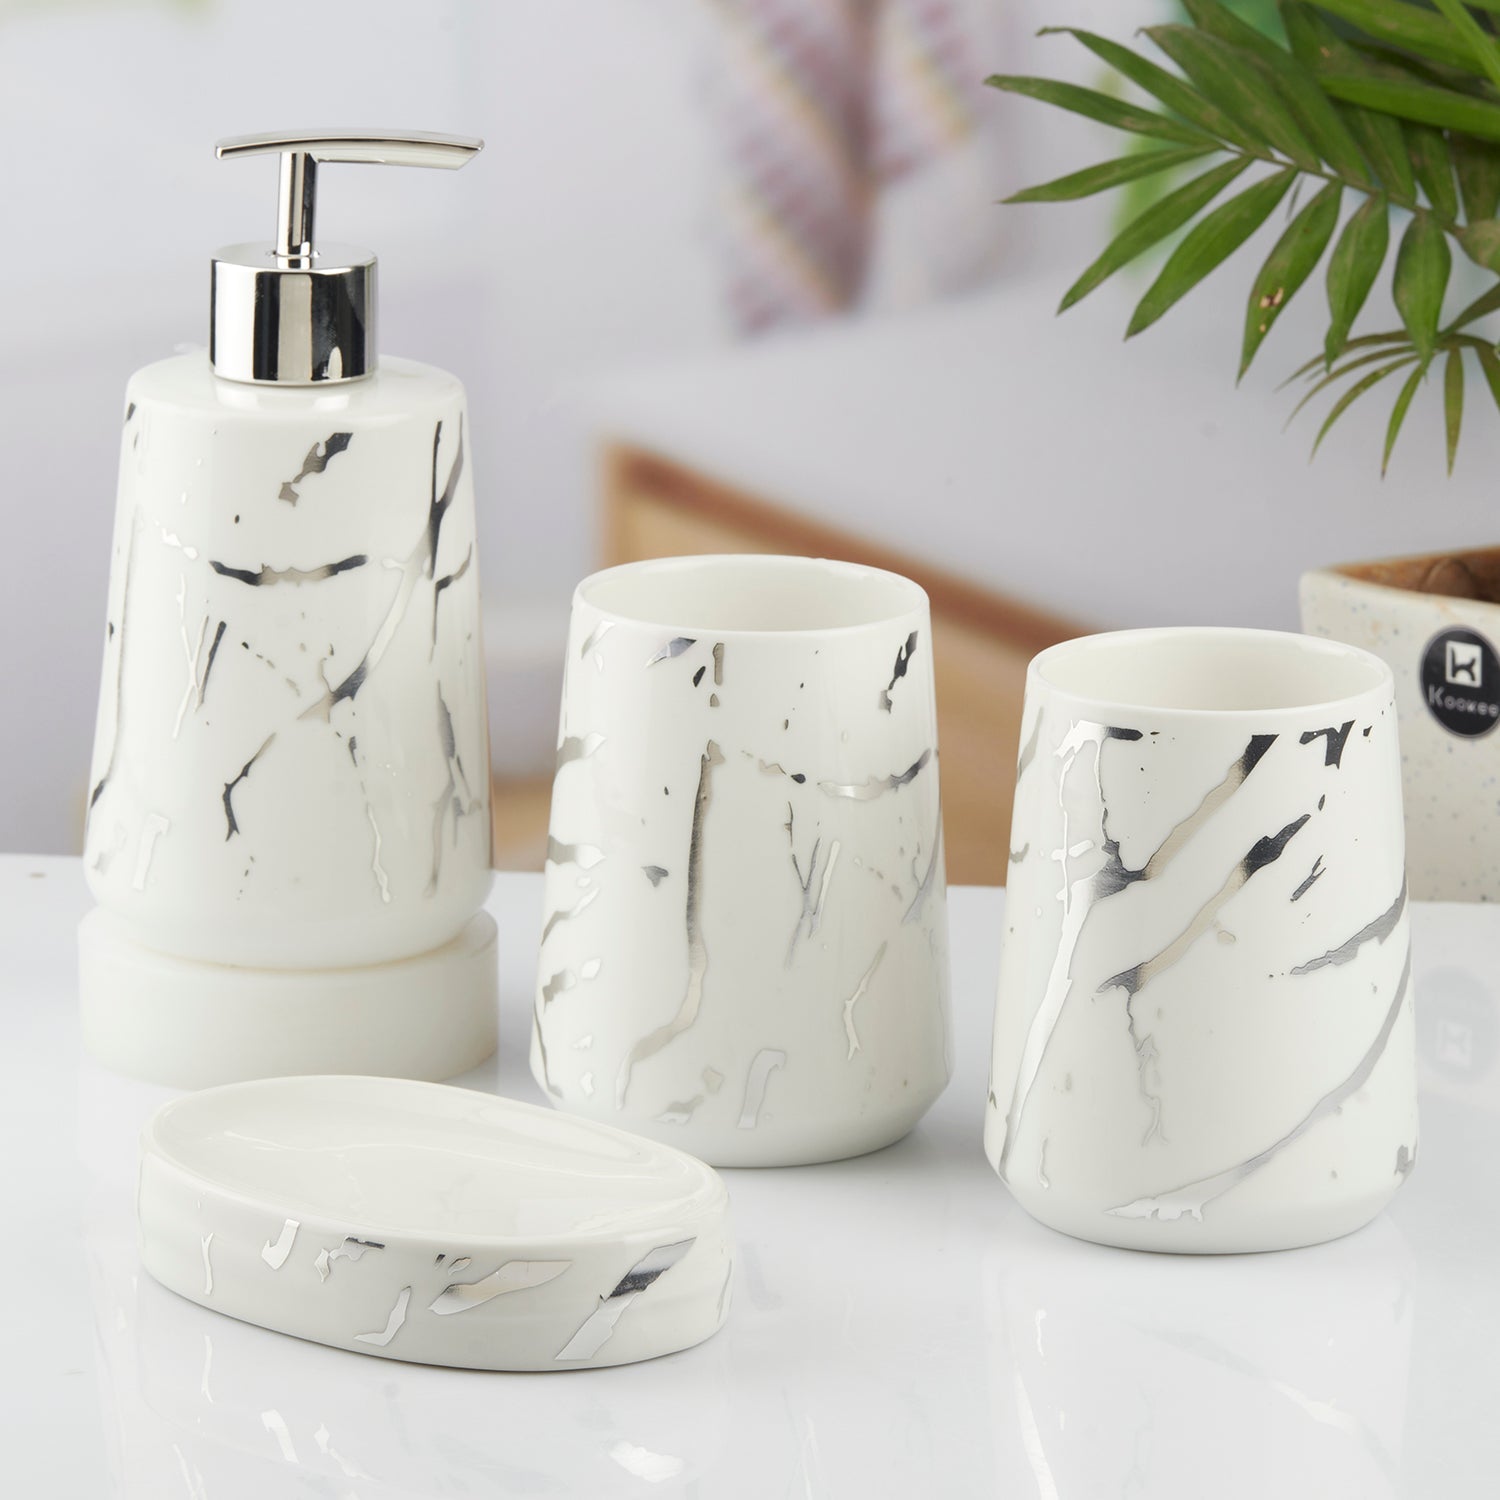 Ceramic Bathroom Accessories Set of 4 Bath Set with Soap Dispenser (9746)